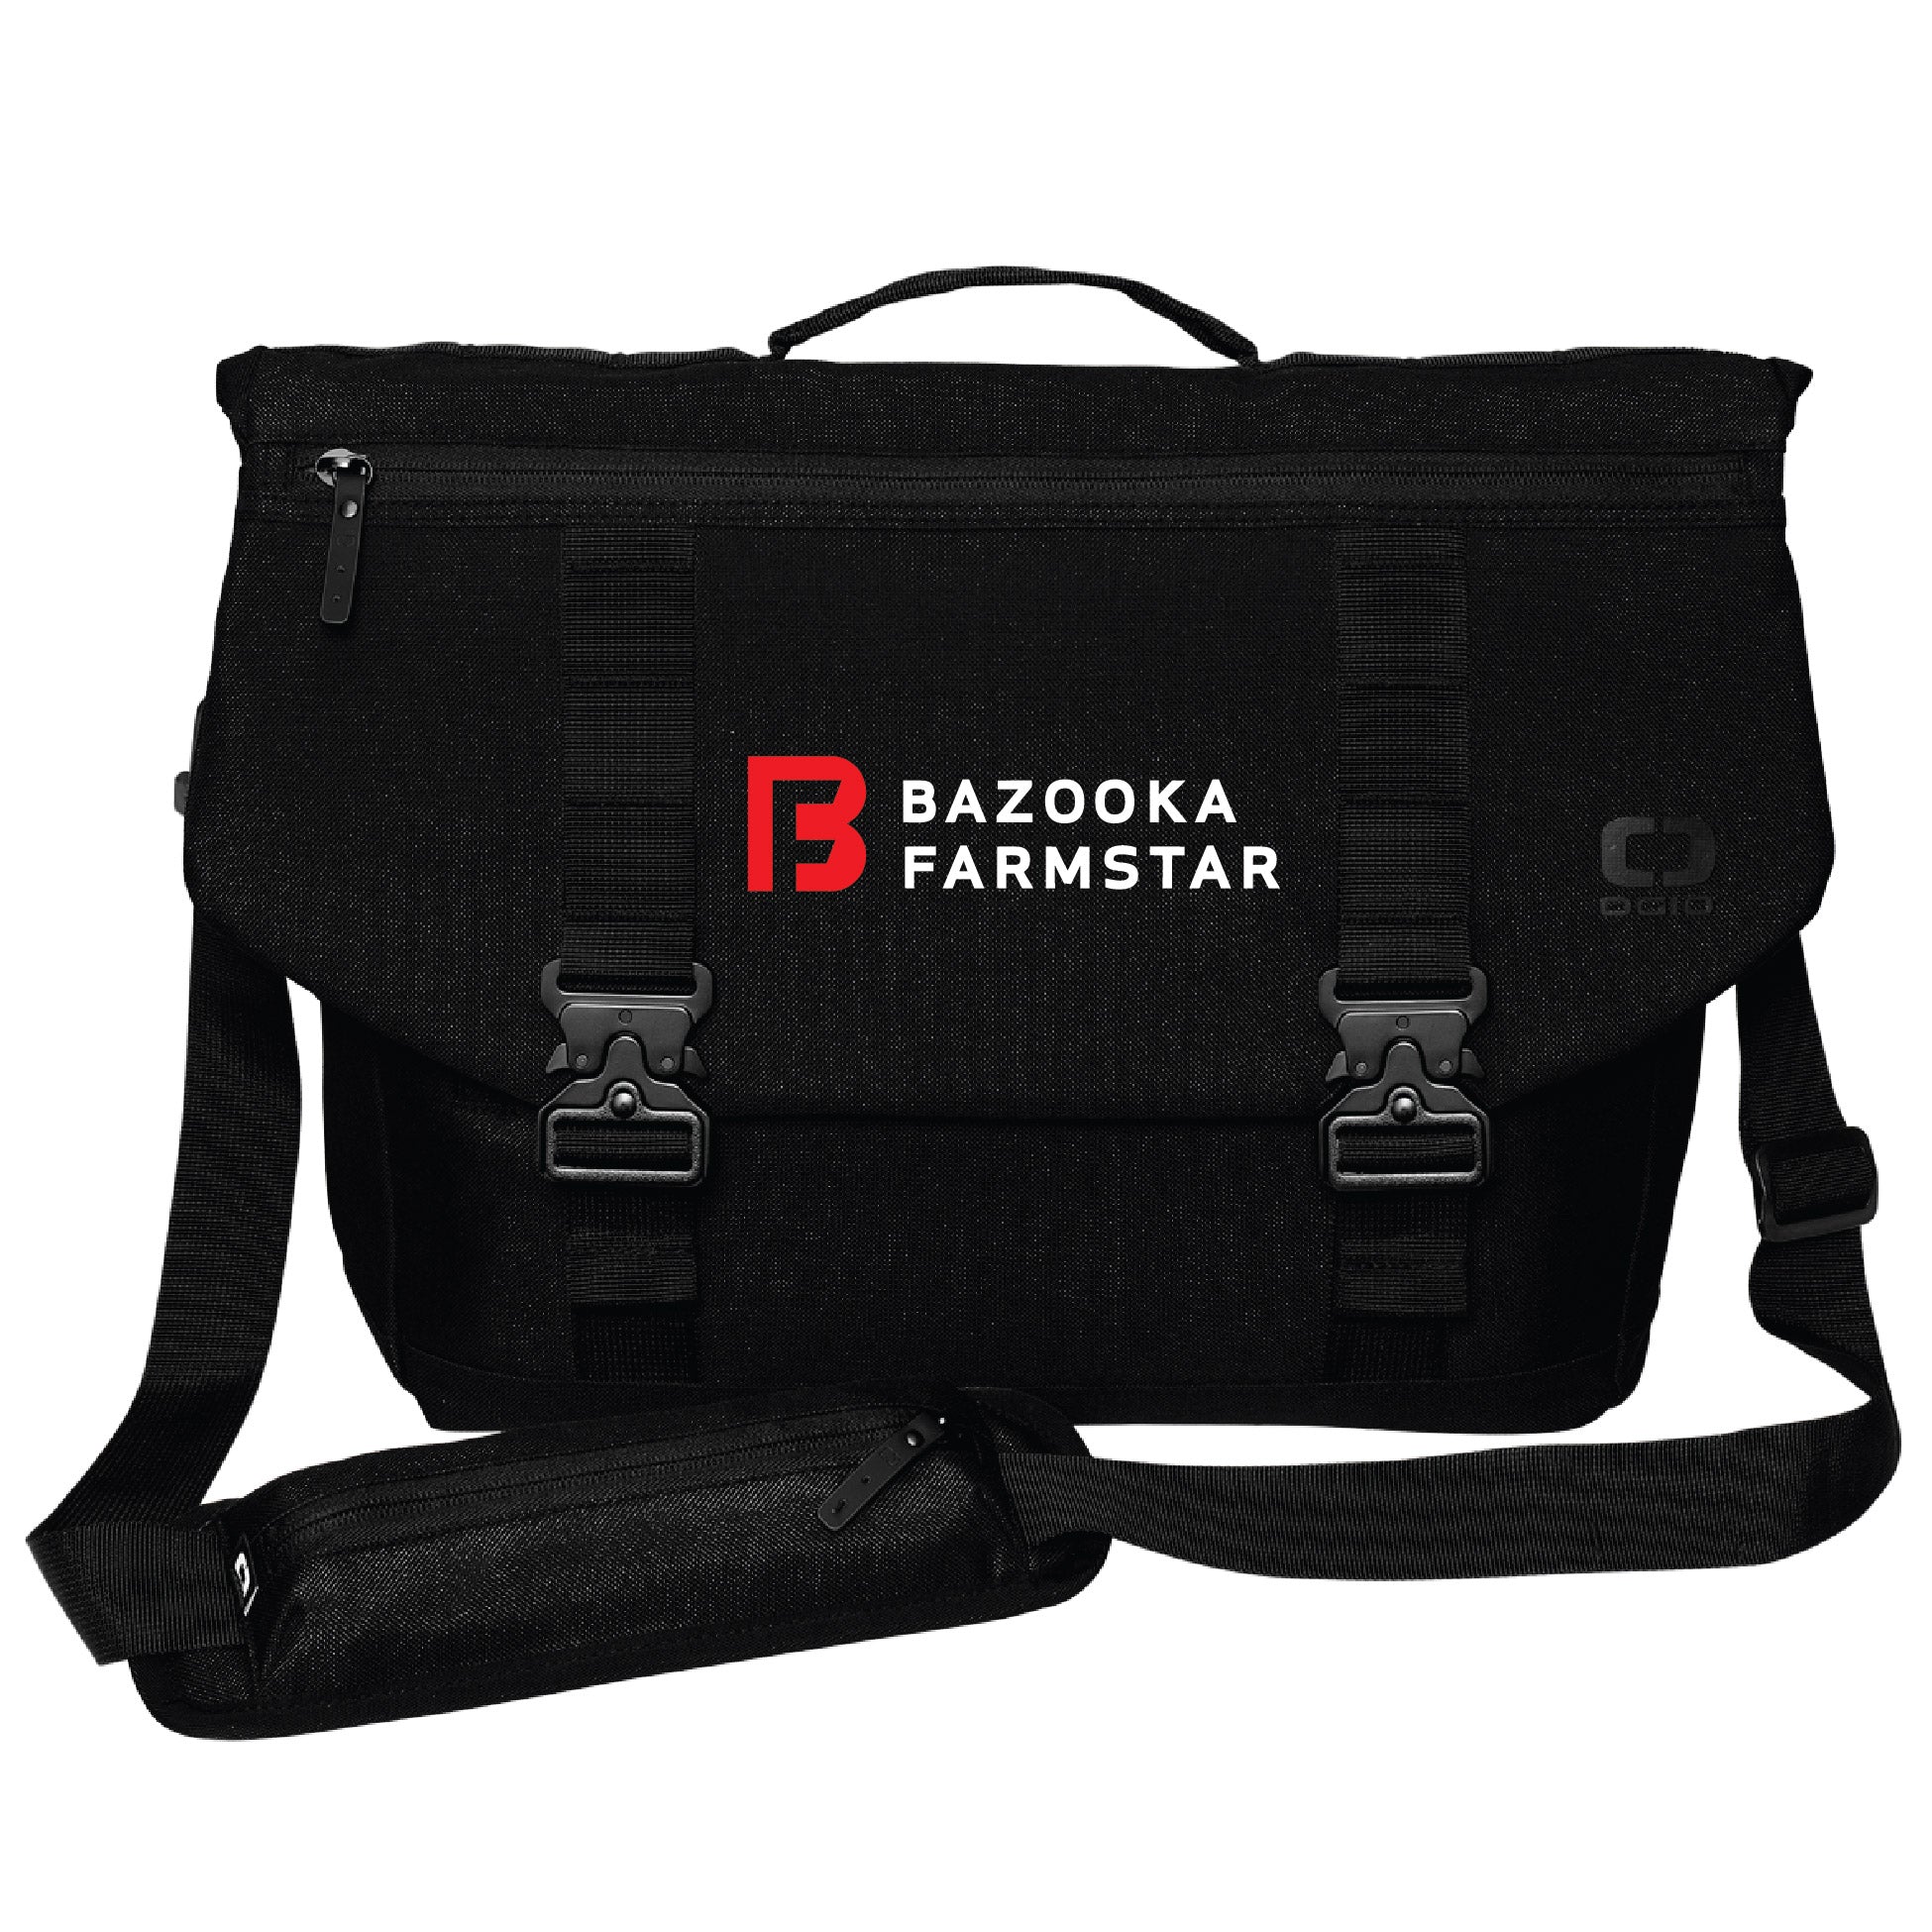 Bazooka Farmstar Messenger Bag